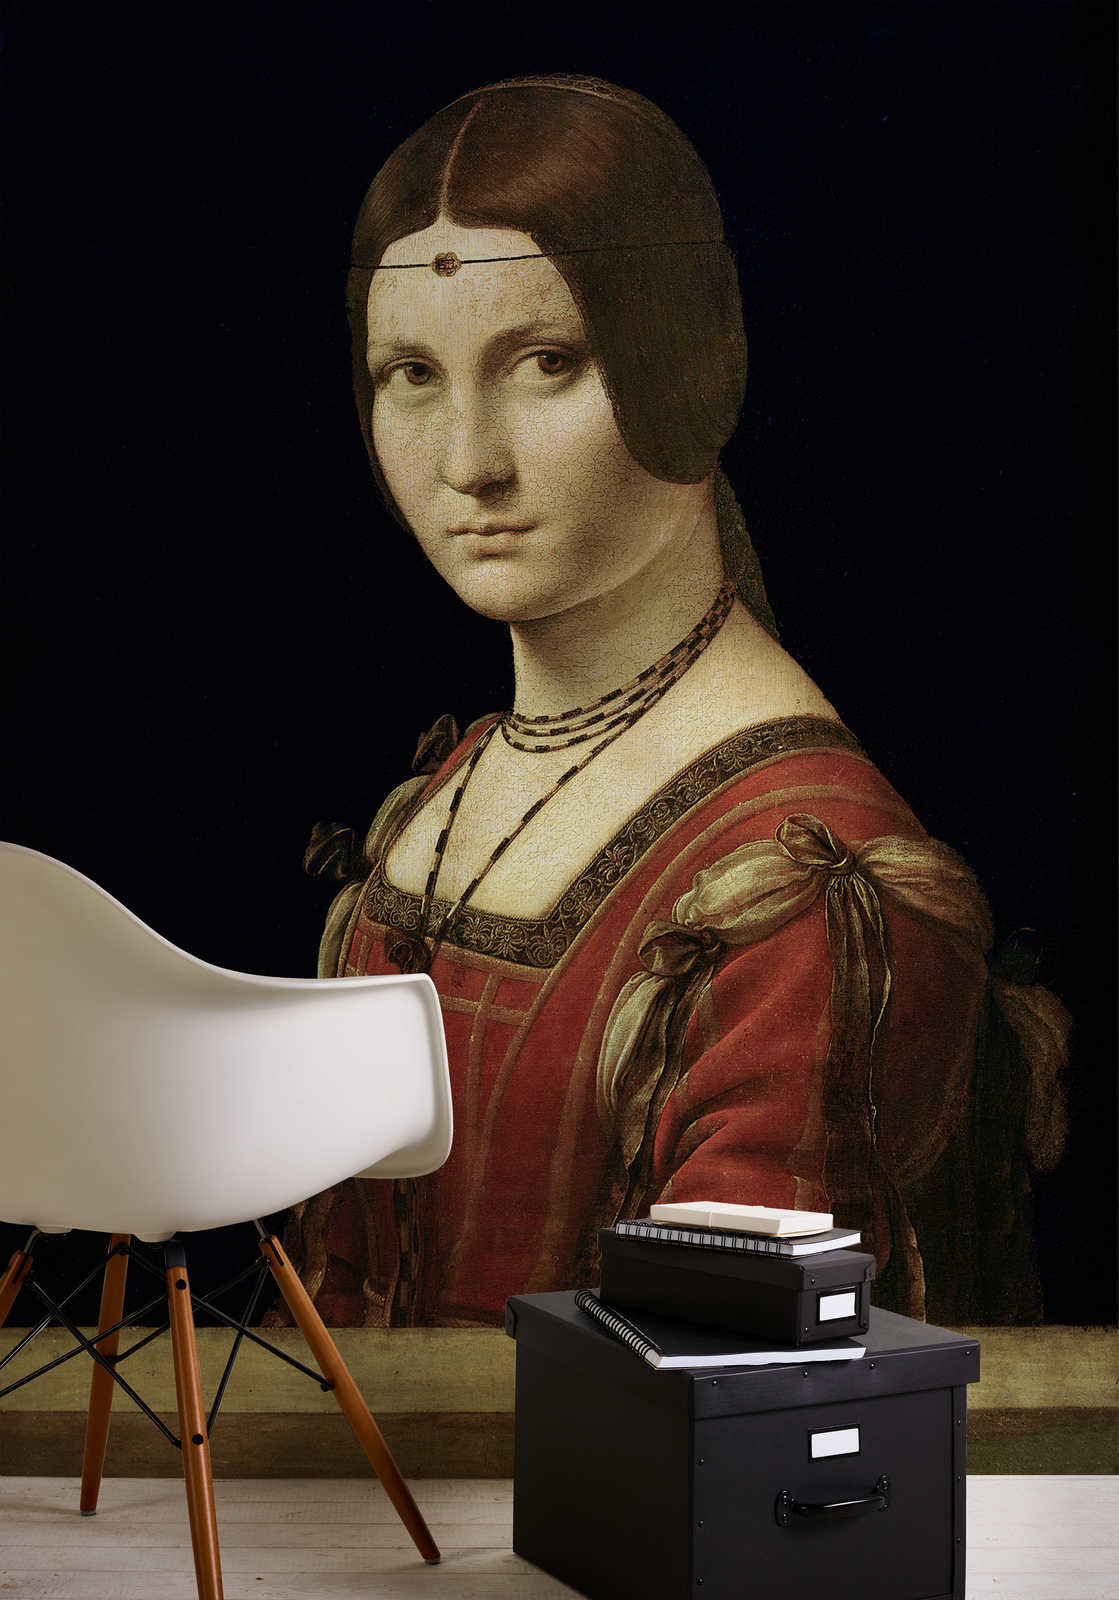             Mural "Retrato de una dama de la corte de Milán" de Leonardo da Vinci
        